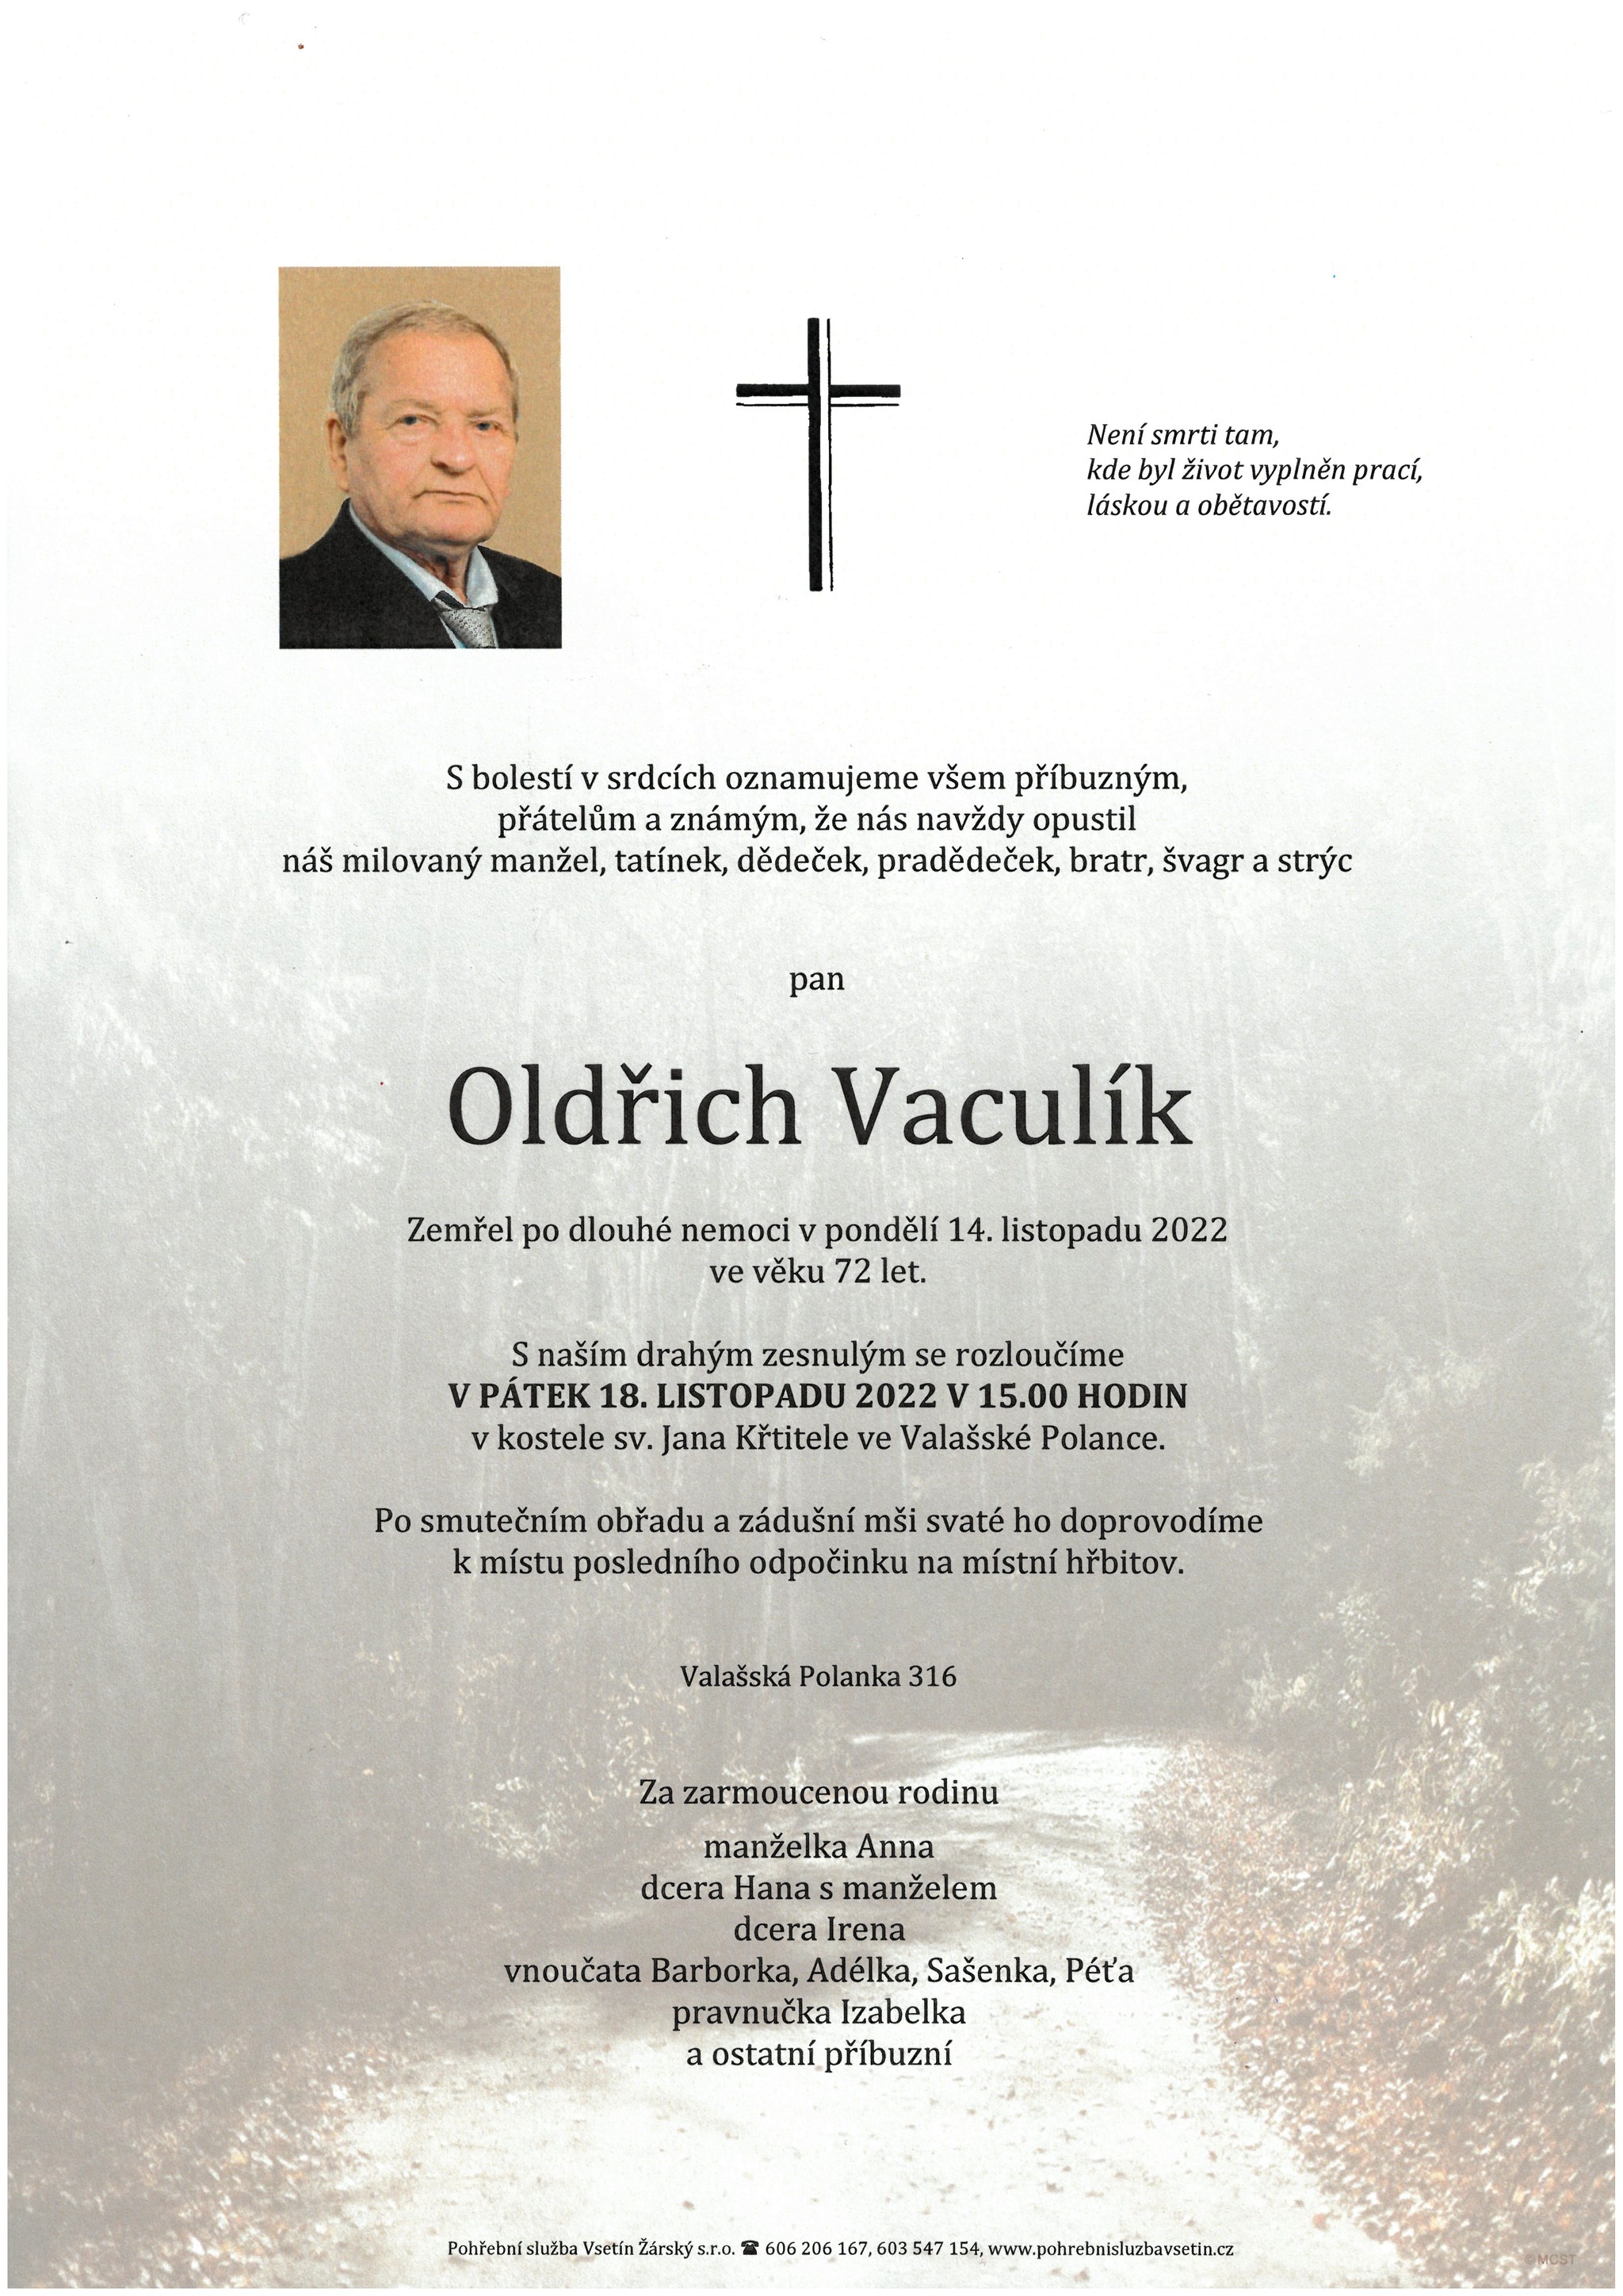 Oldřich Vaculík